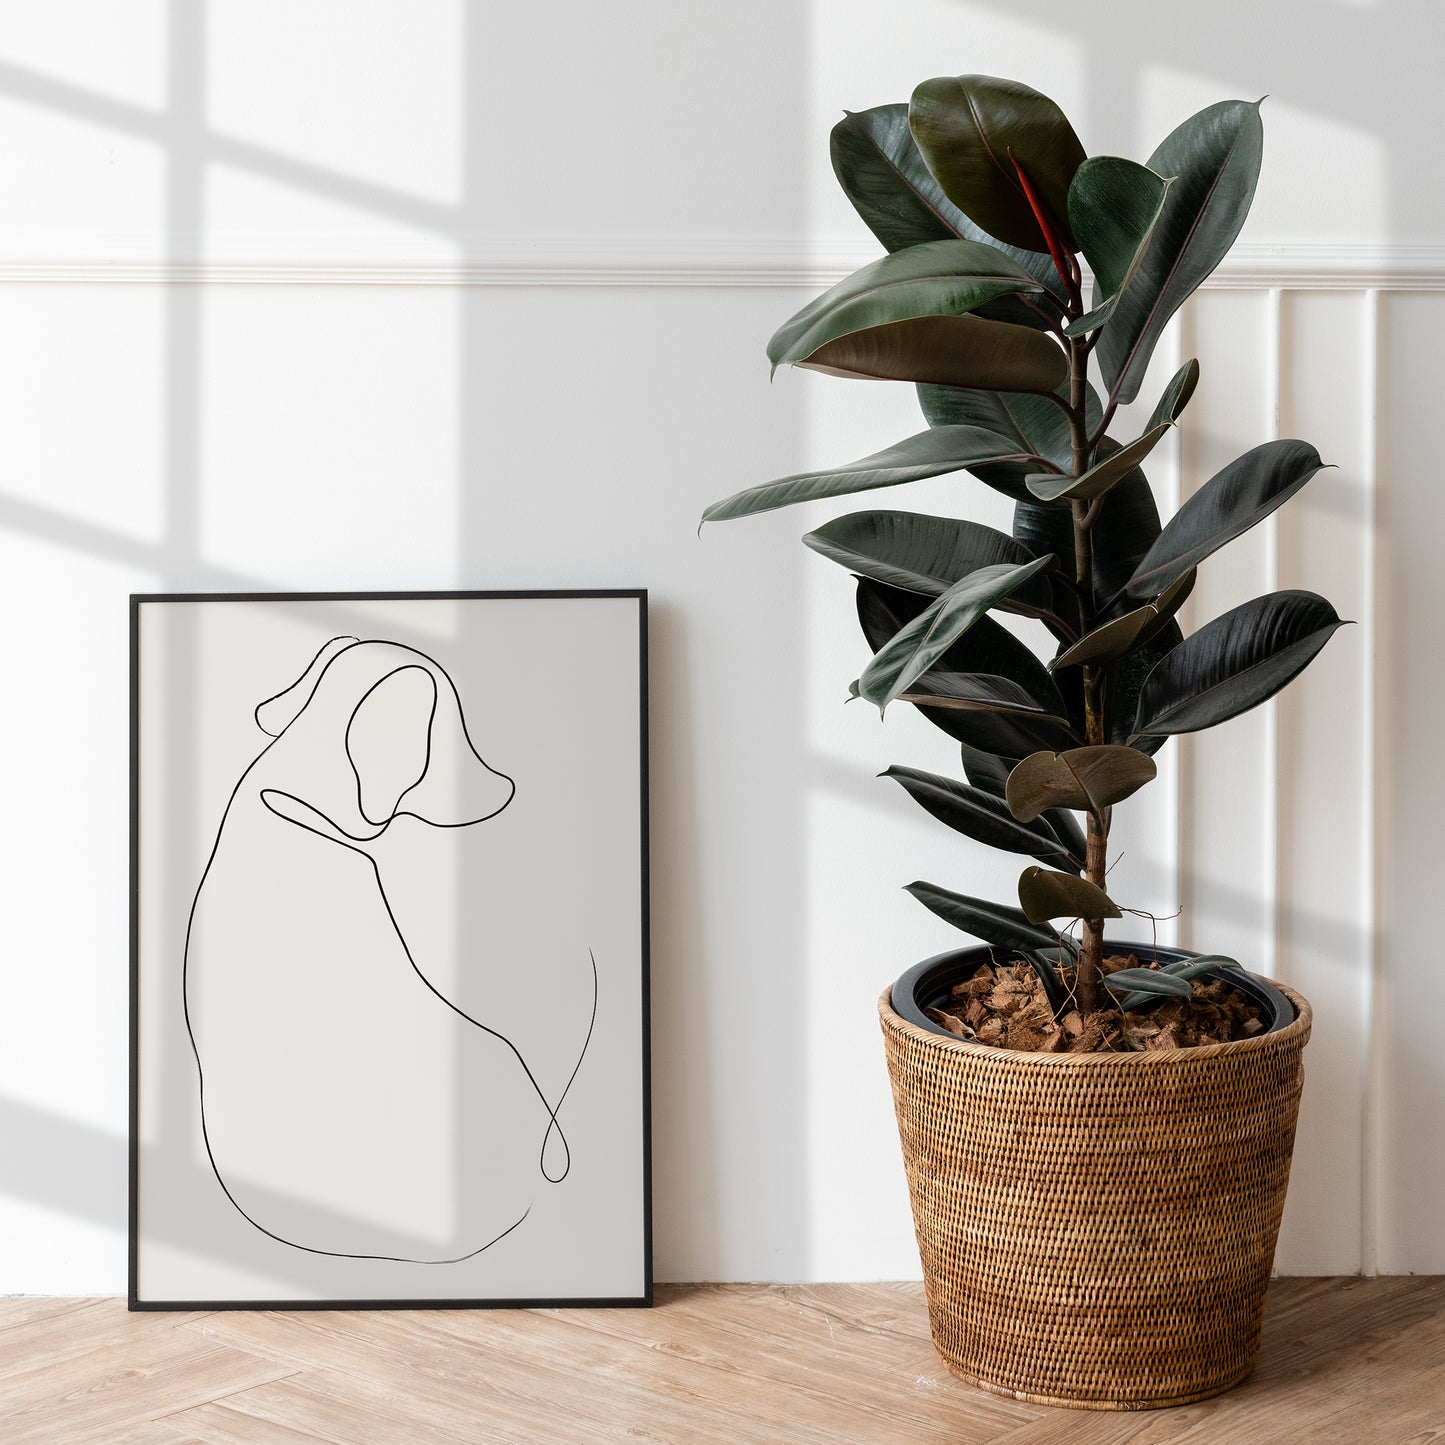 Picasso Dog Line Art Poster